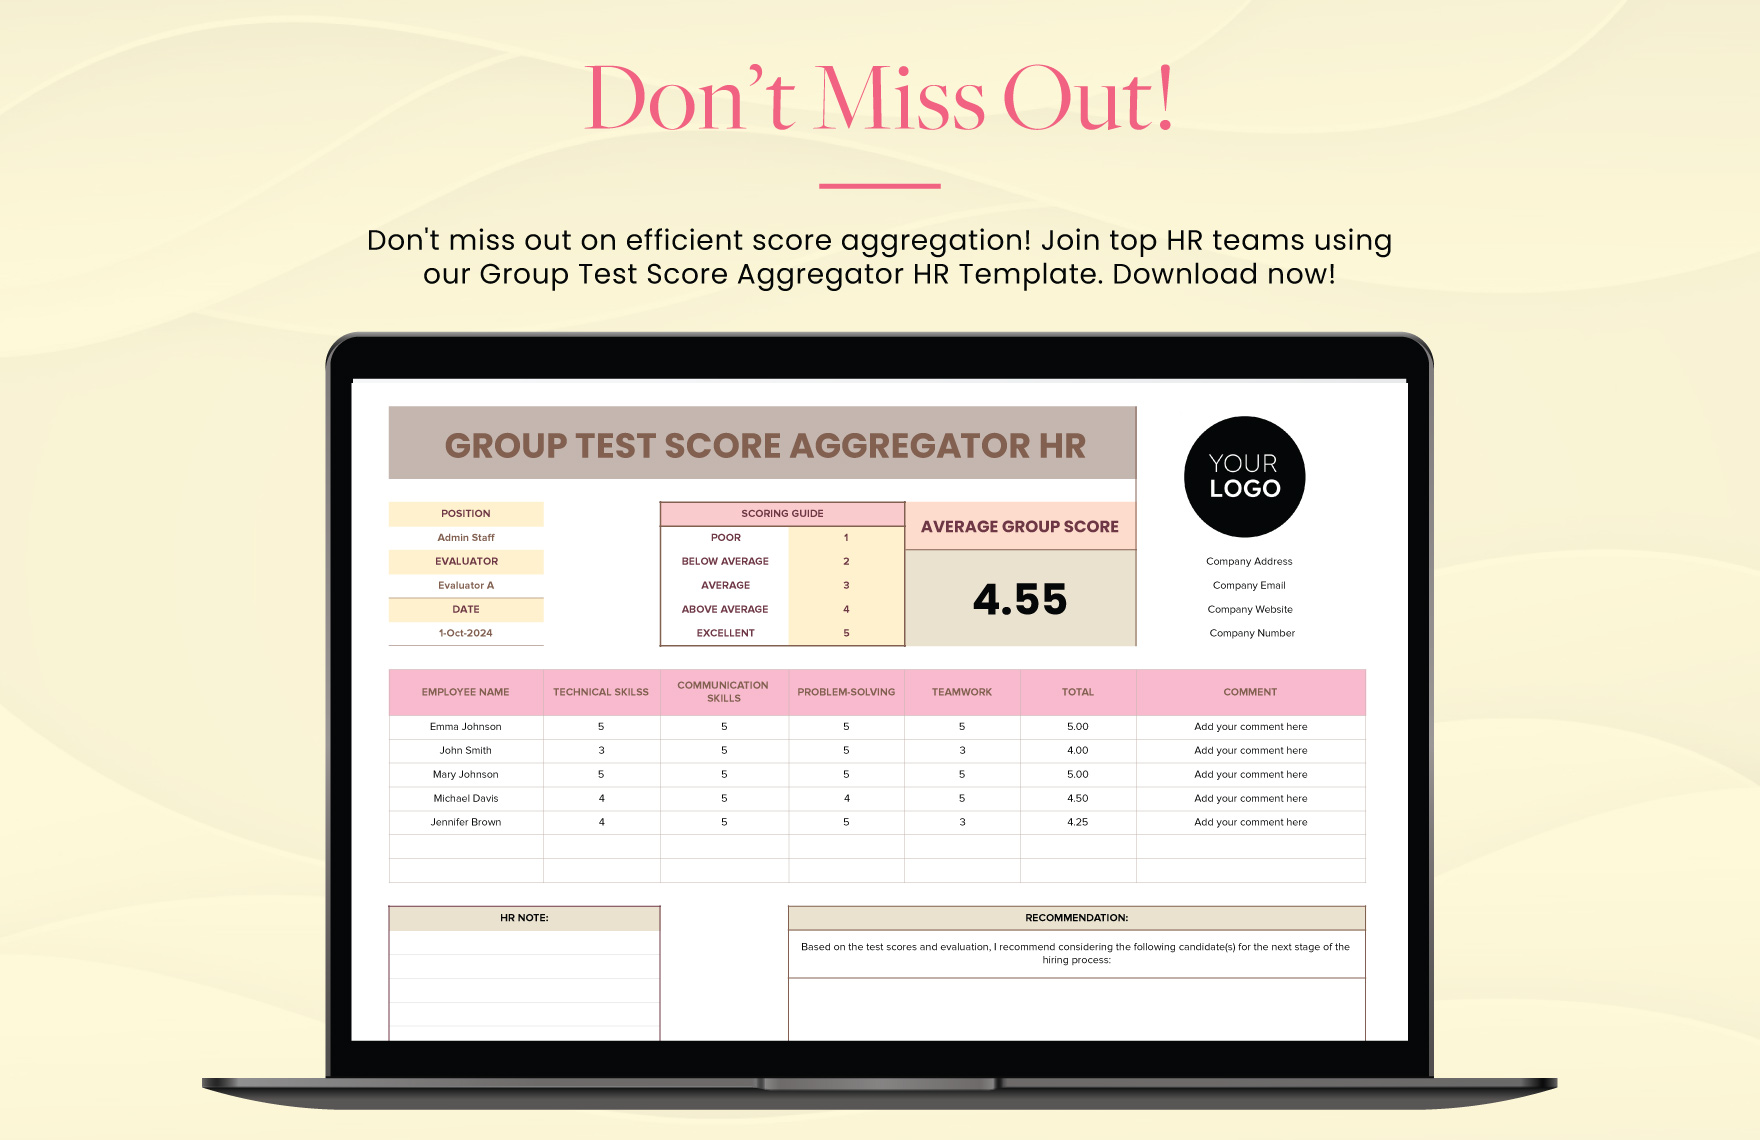 Group Test Score Aggregator HR Template